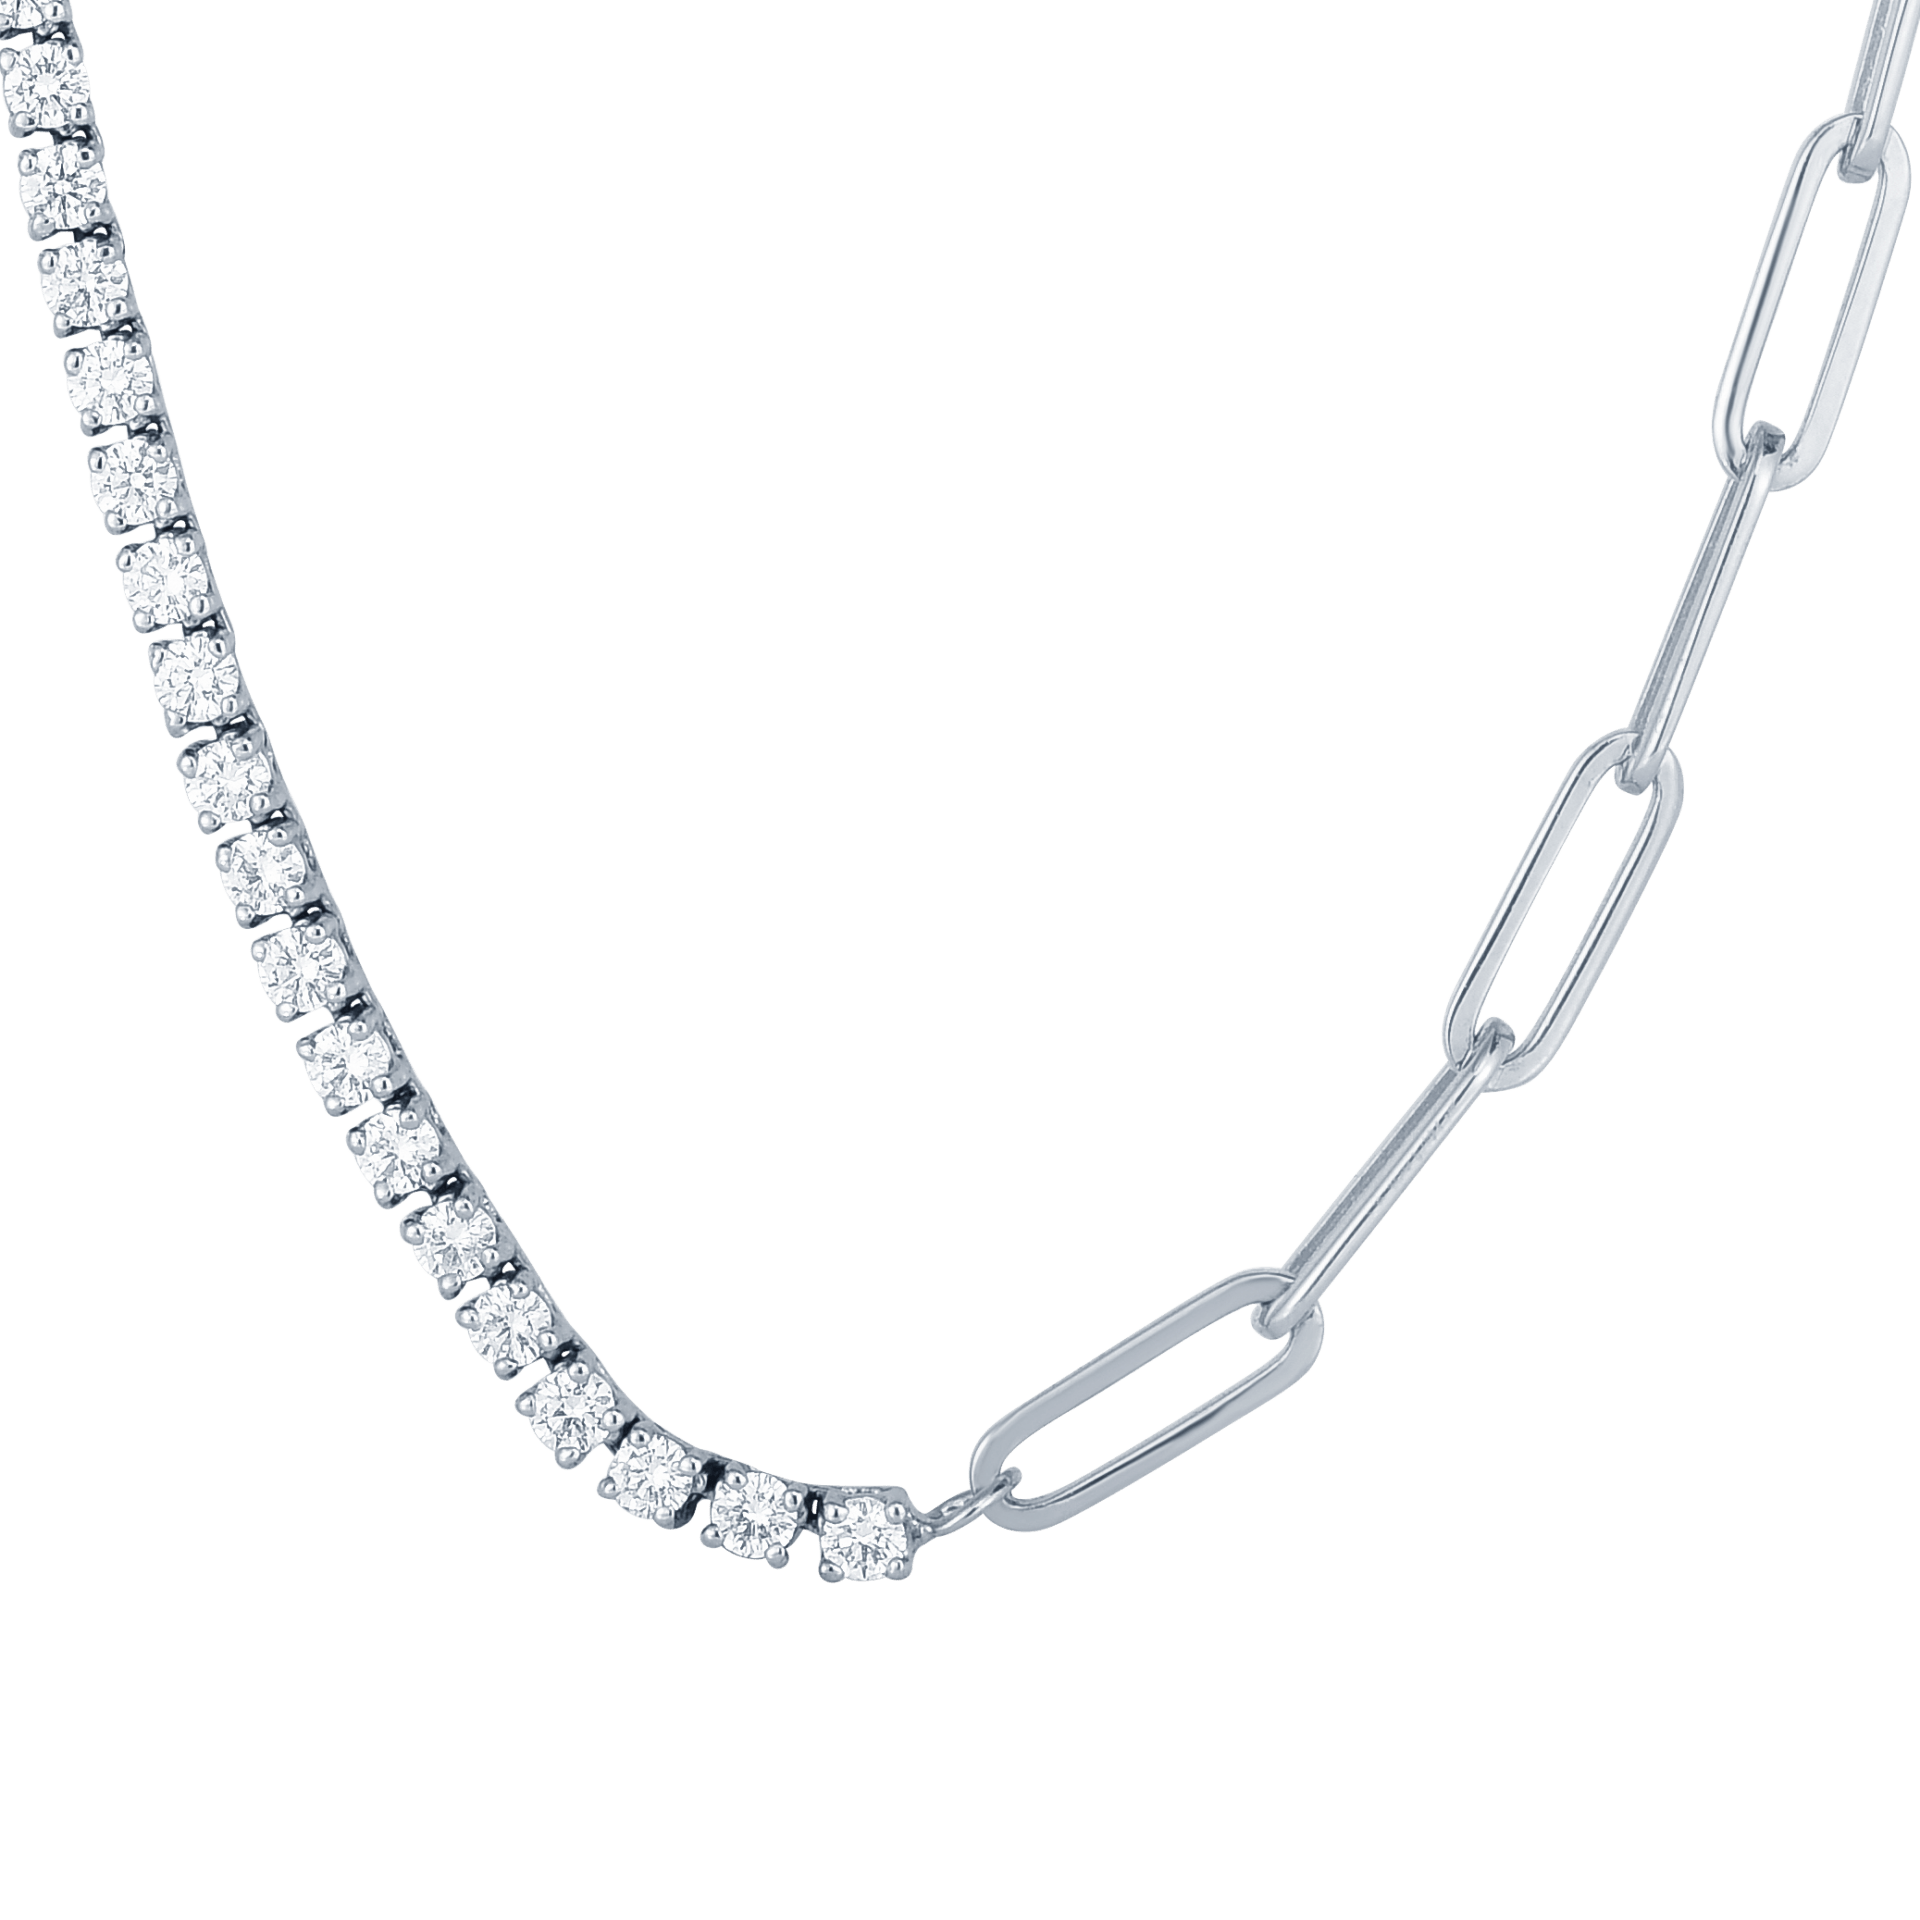 10mm Clustered White Gold Tennis Bracelet | Hip hop trends, Trending  bracelets, Hand chain jewelry